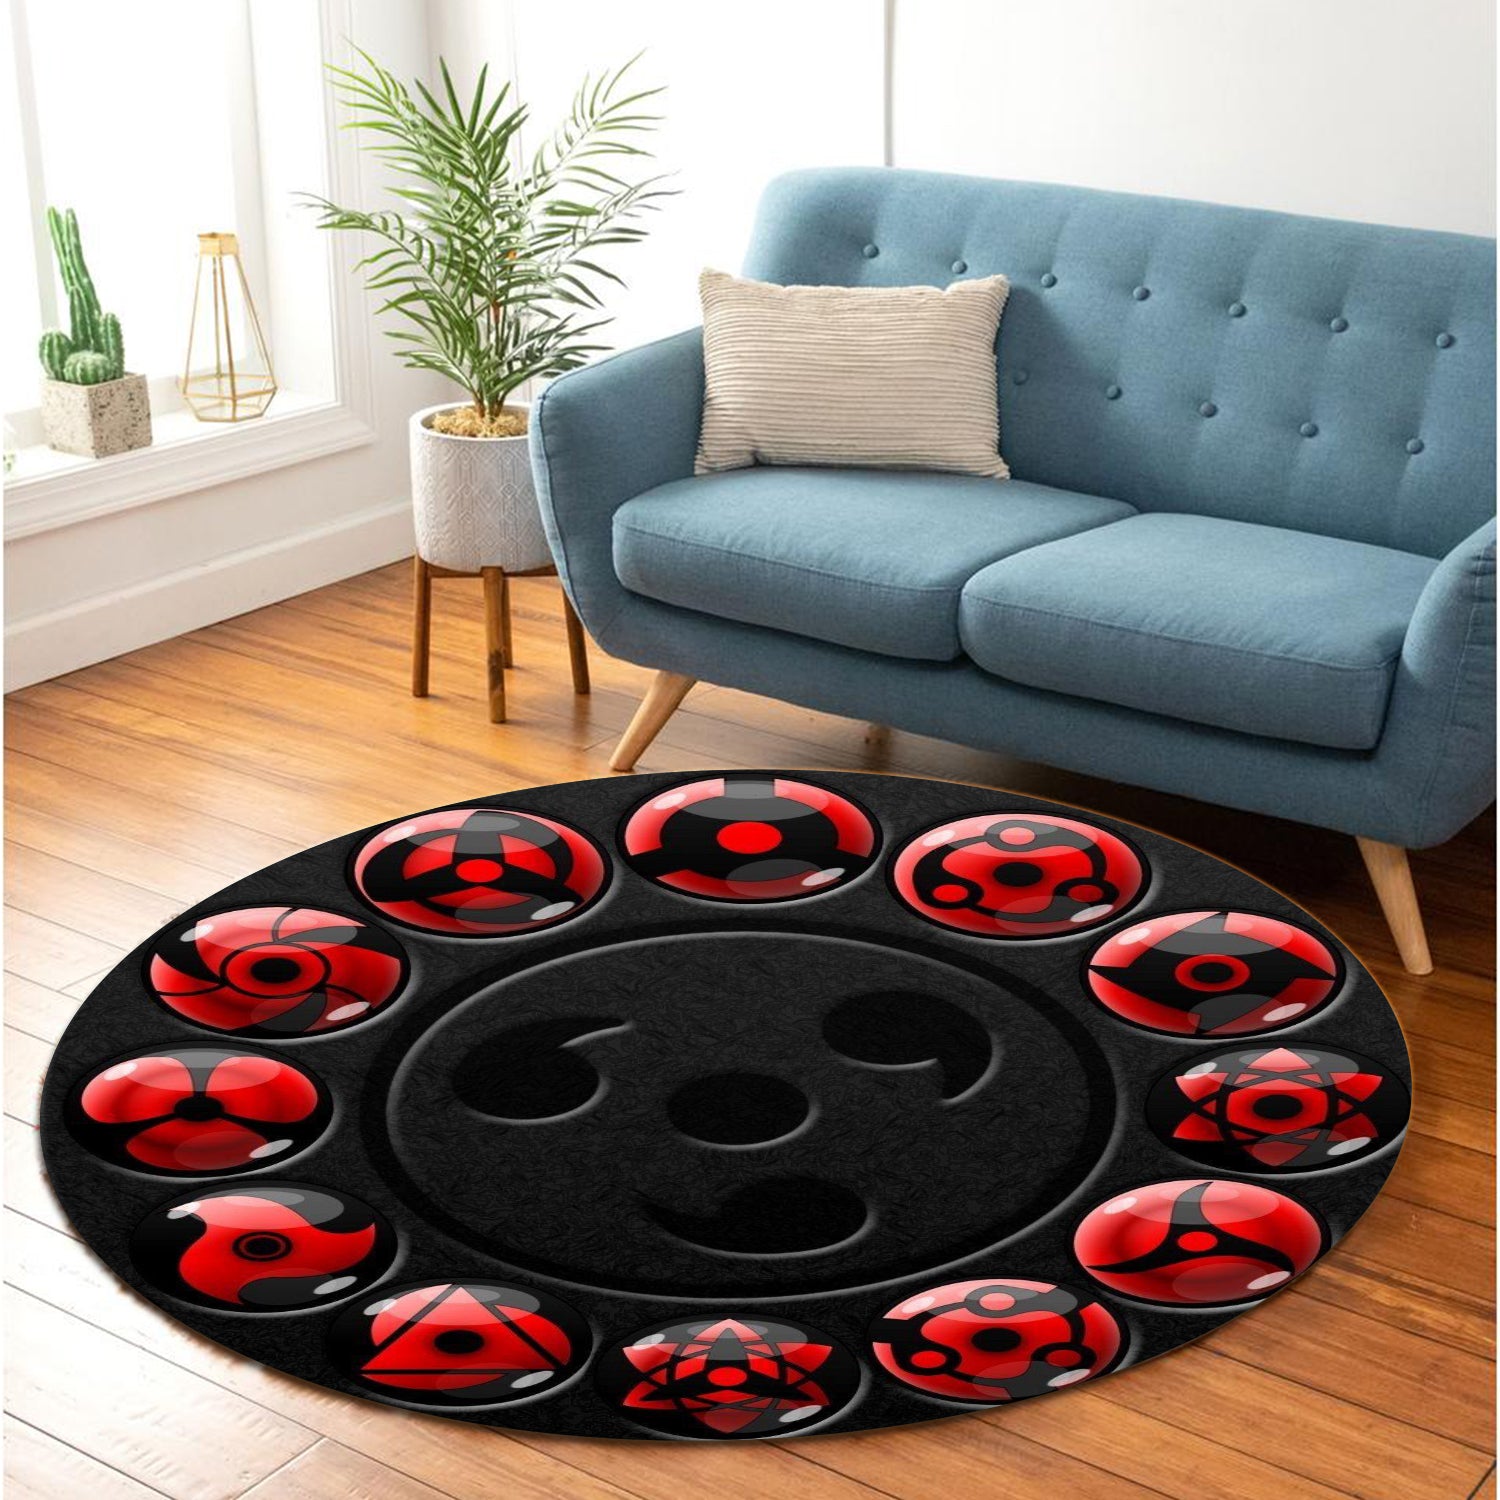 Sharingan Naruto Round Carpet Rug Bedroom Livingroom Home Decor Nearkii